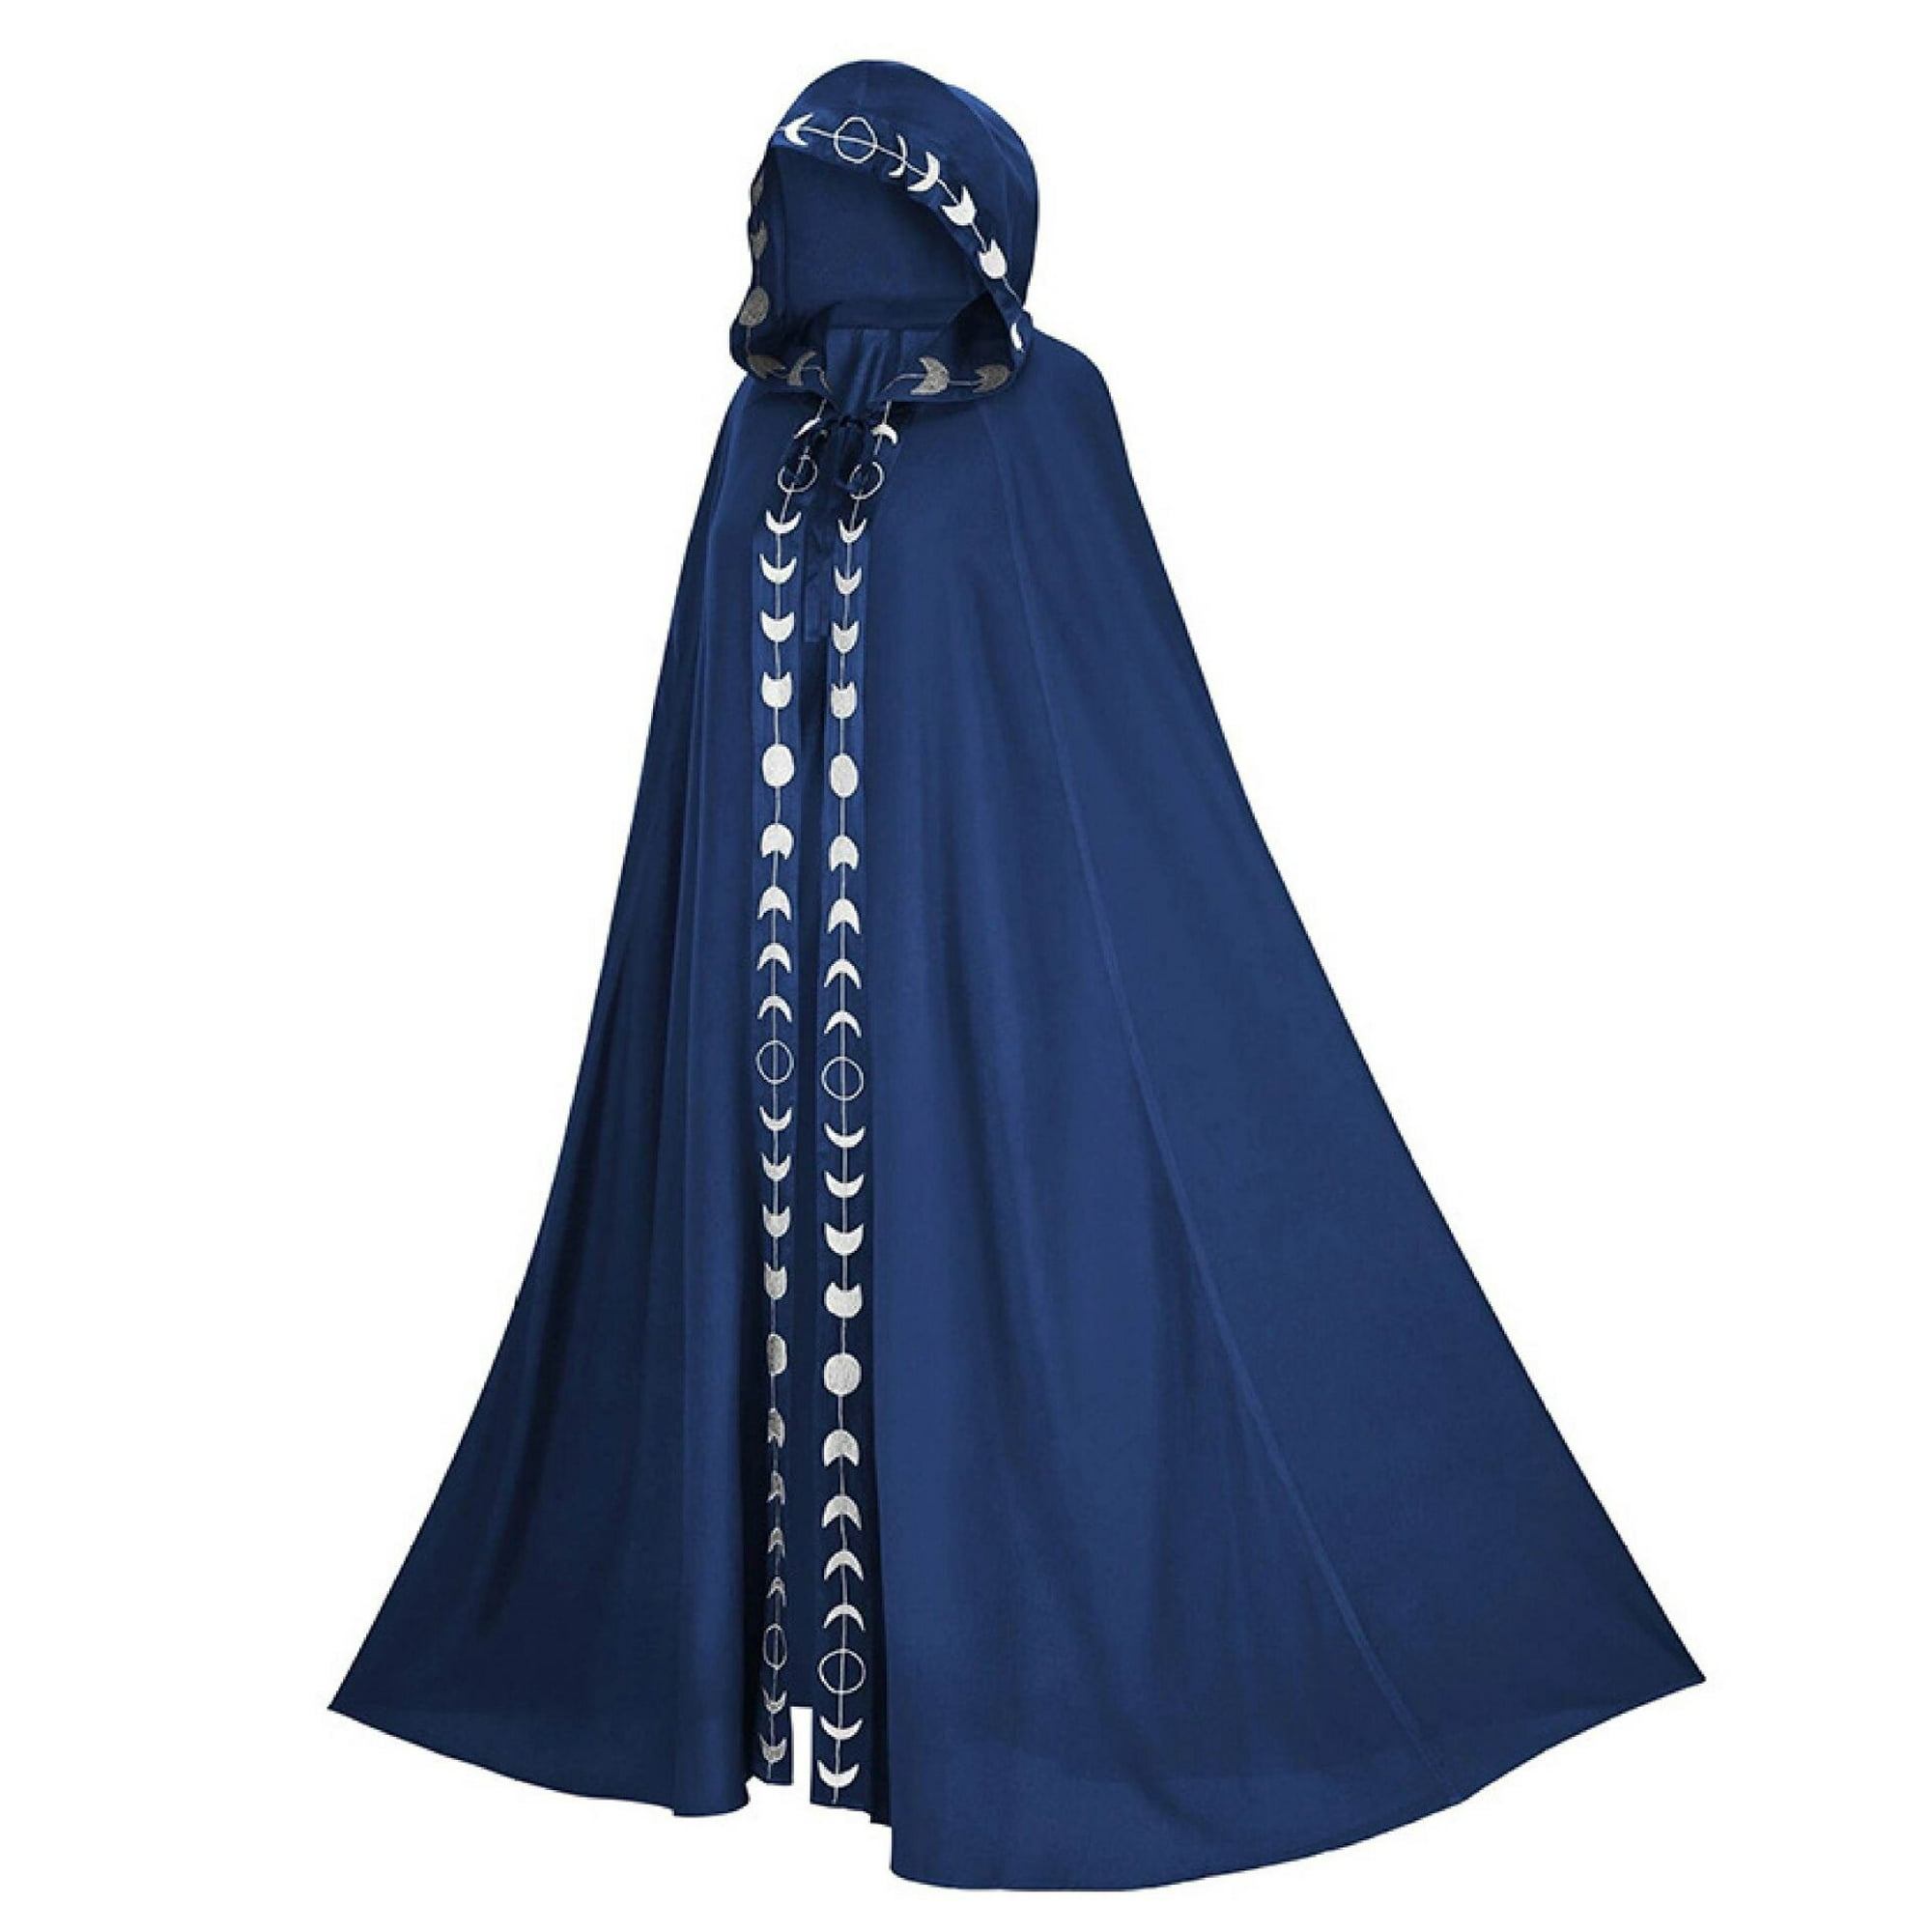 Capa medieval con capucha para recreación, vestido de mujer italiana, ropa  femenina vikinga para evento medieval, vestido romántico histórico -   México